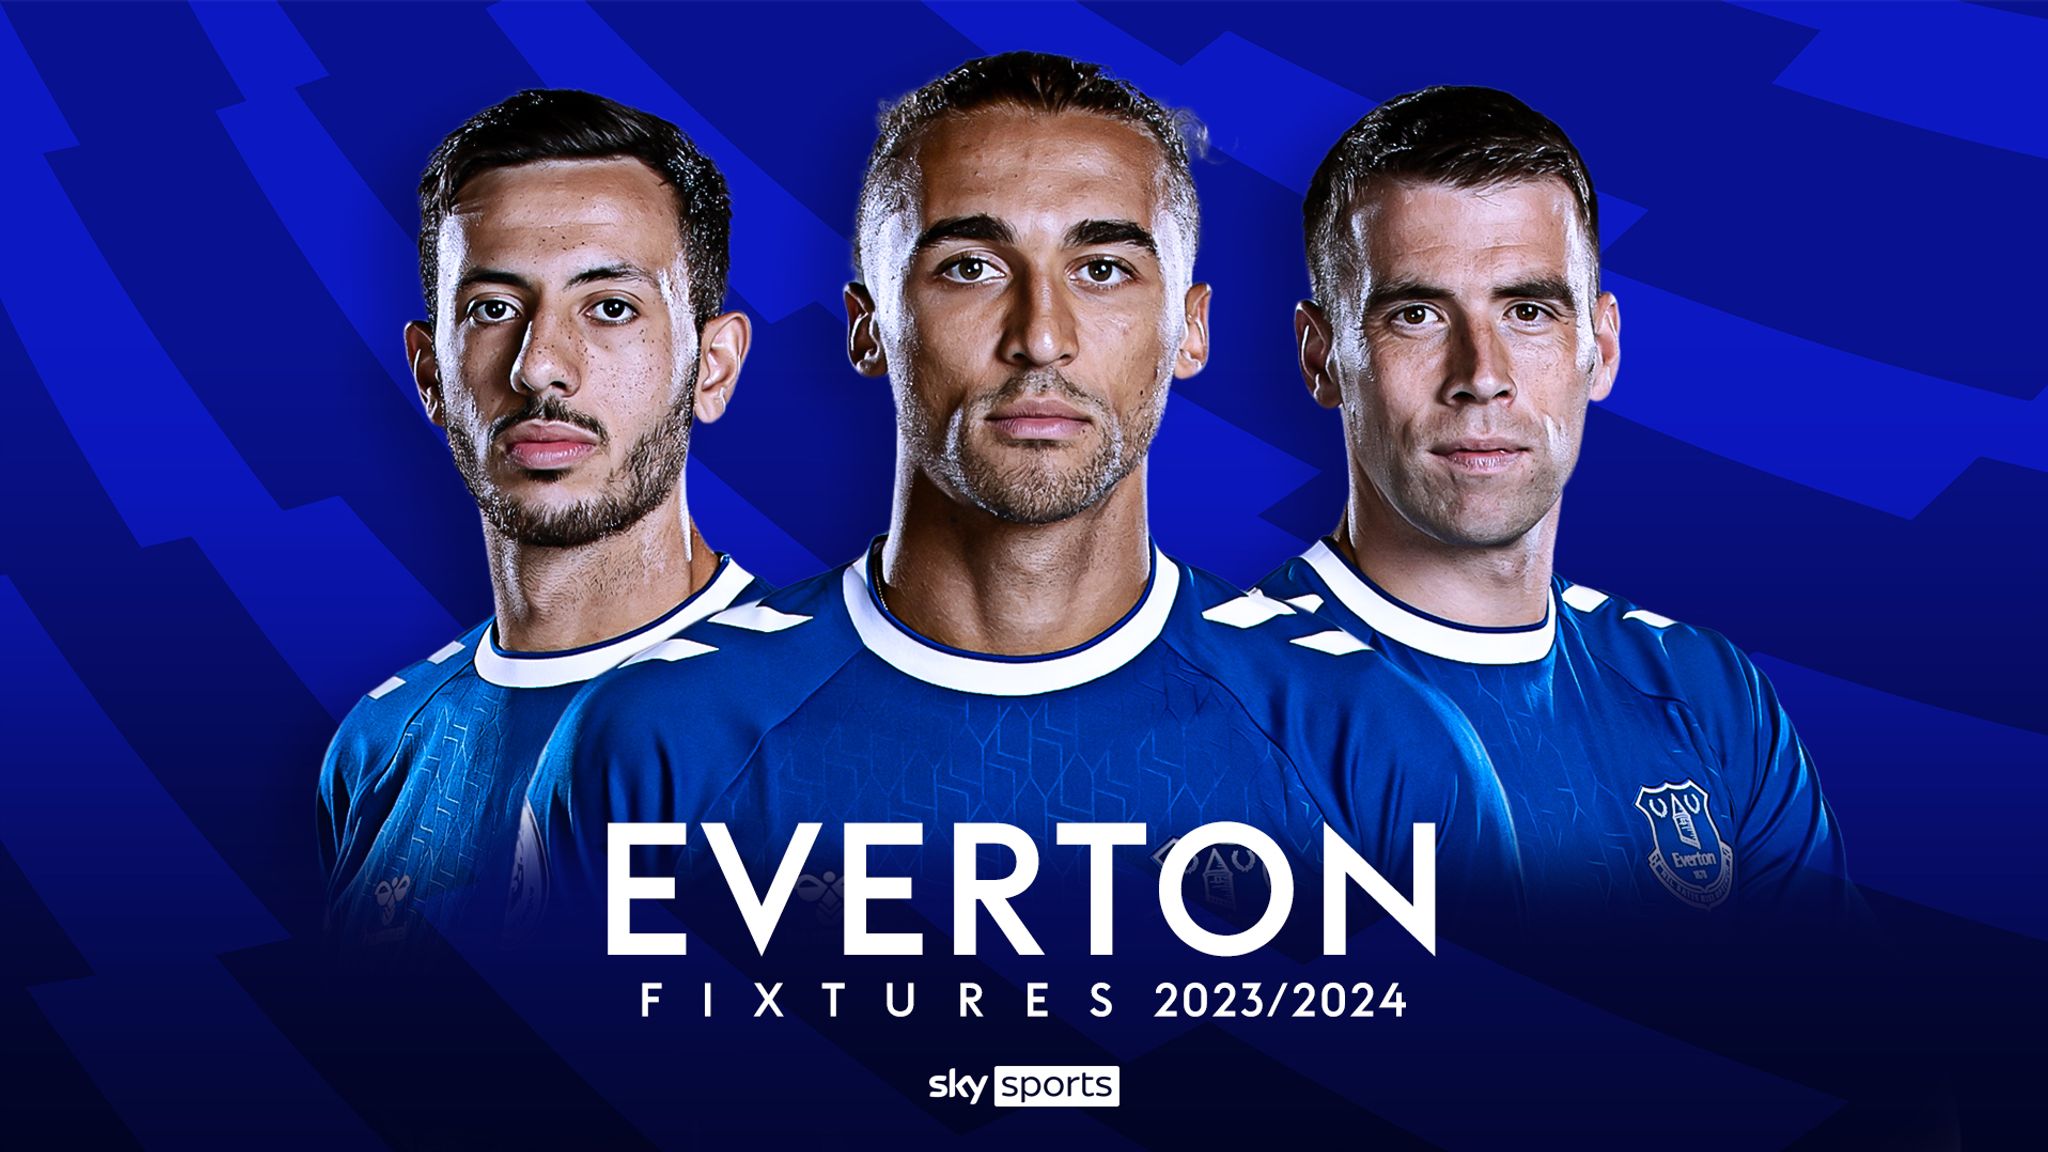 Everton Premier League 2023/24 fixtures and schedule Football News Sky Sports